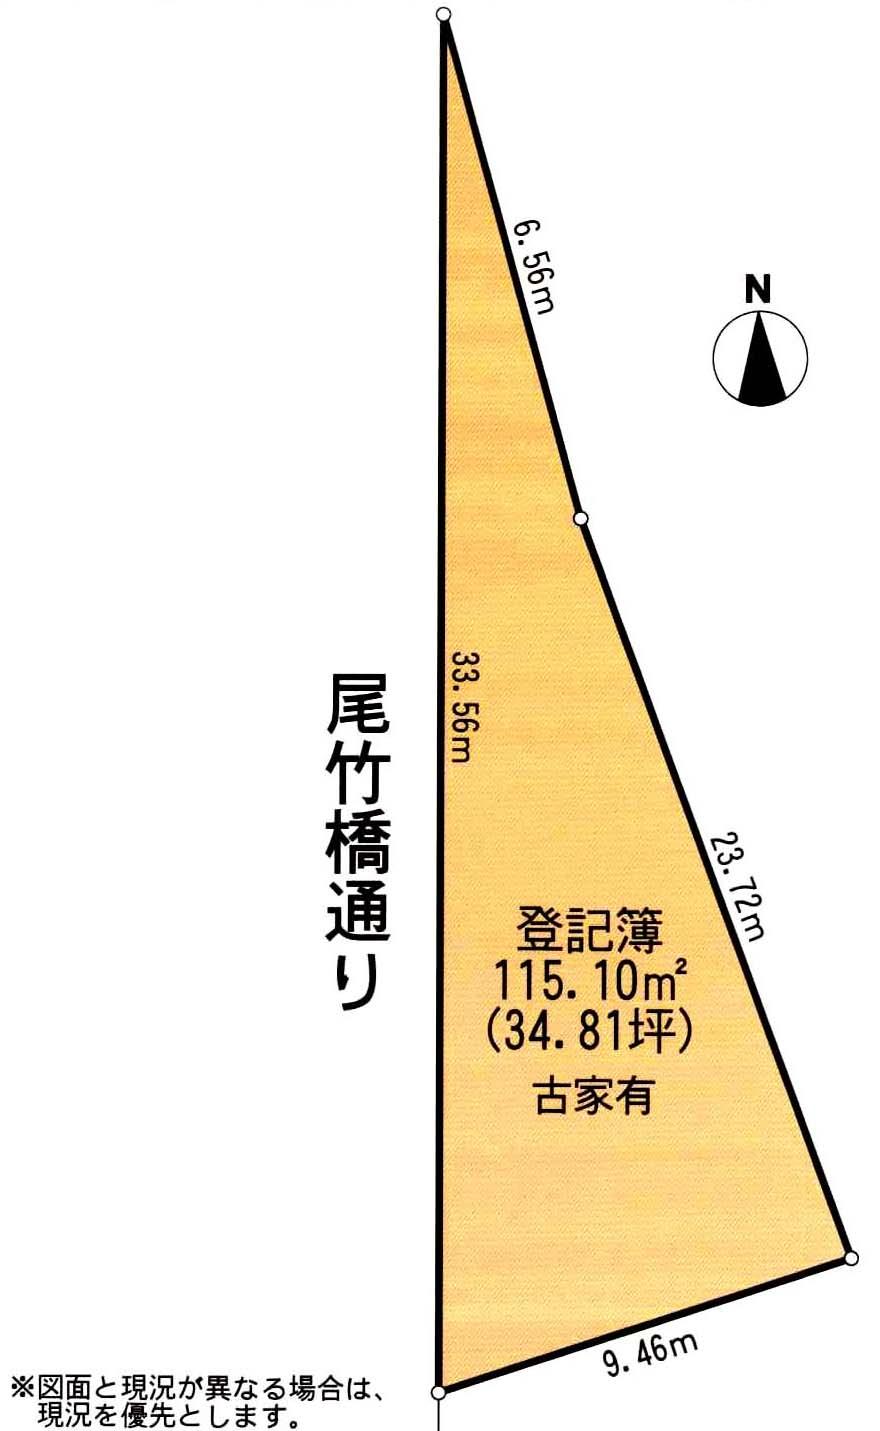 Compartment figure. Land price 31,320,000 yen, Land area 115.1 sq m